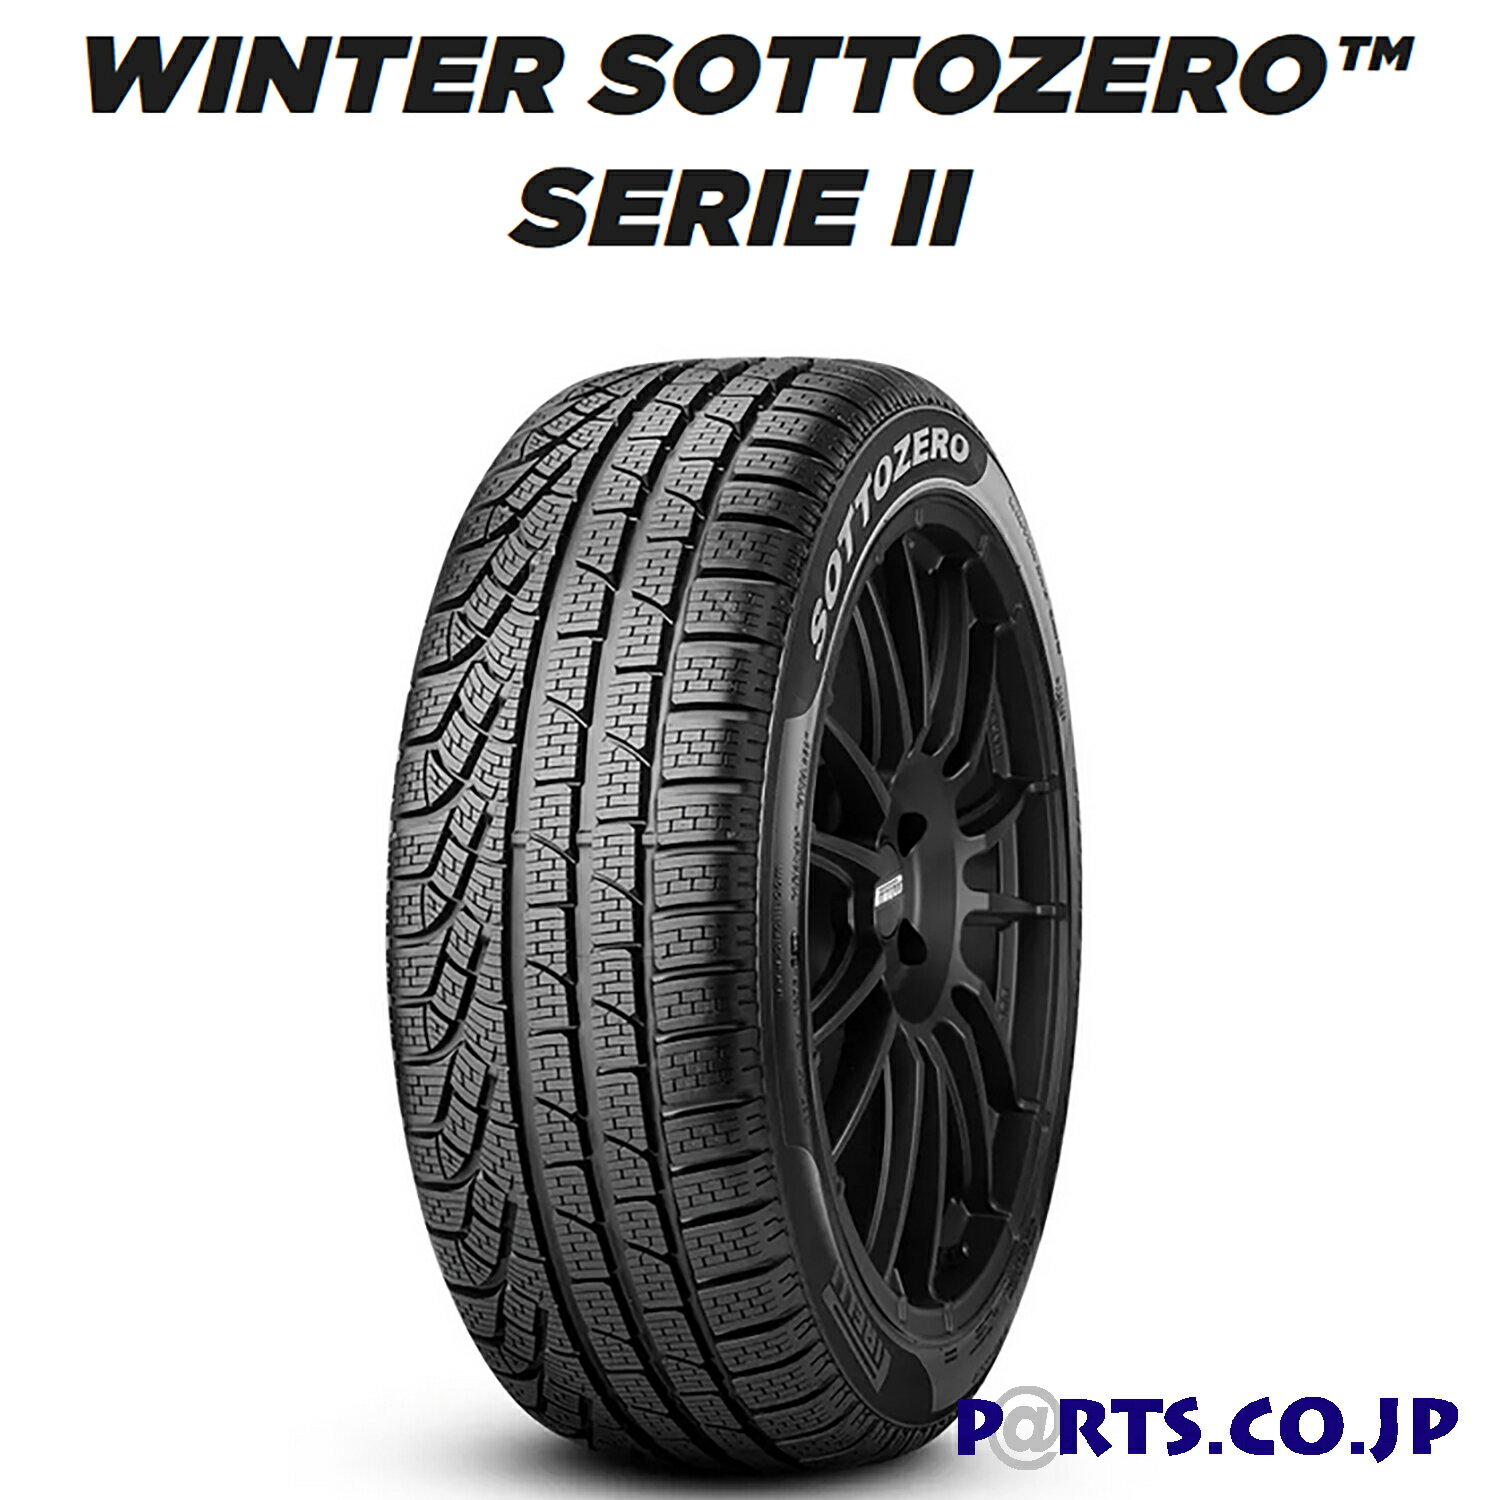 WINTER 240 SOTTOZERO II 205/55R17 91V (N0)